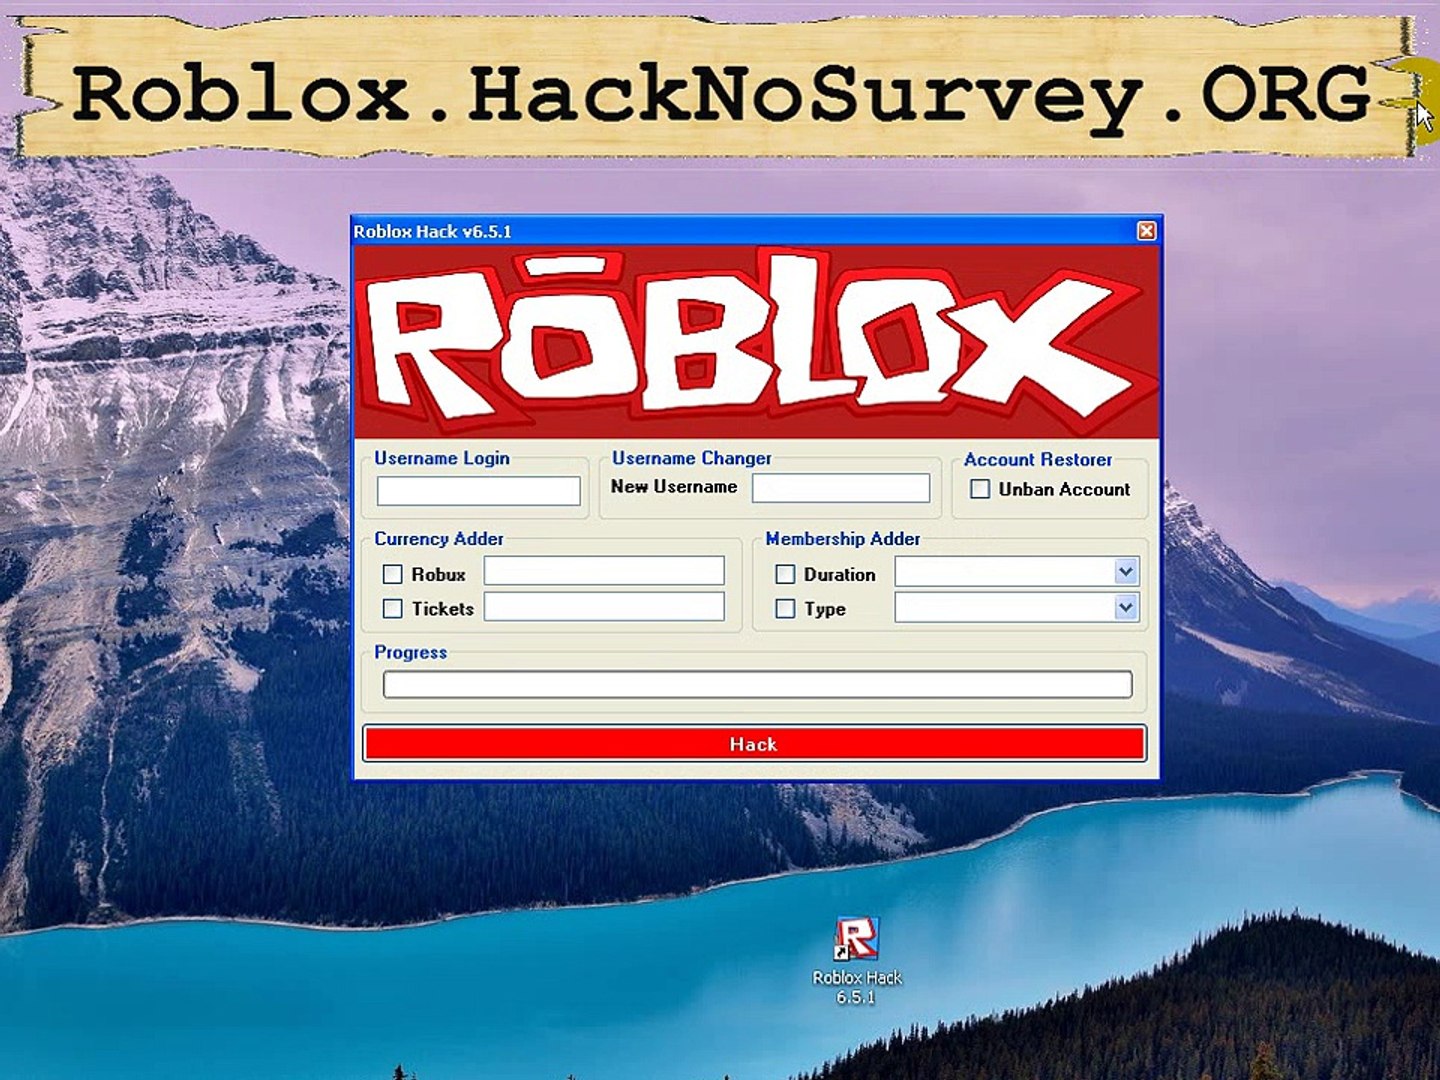 Roblox Final Hack 2015 Unlimited Robux And Tix No Survey - robux hack no survey no password